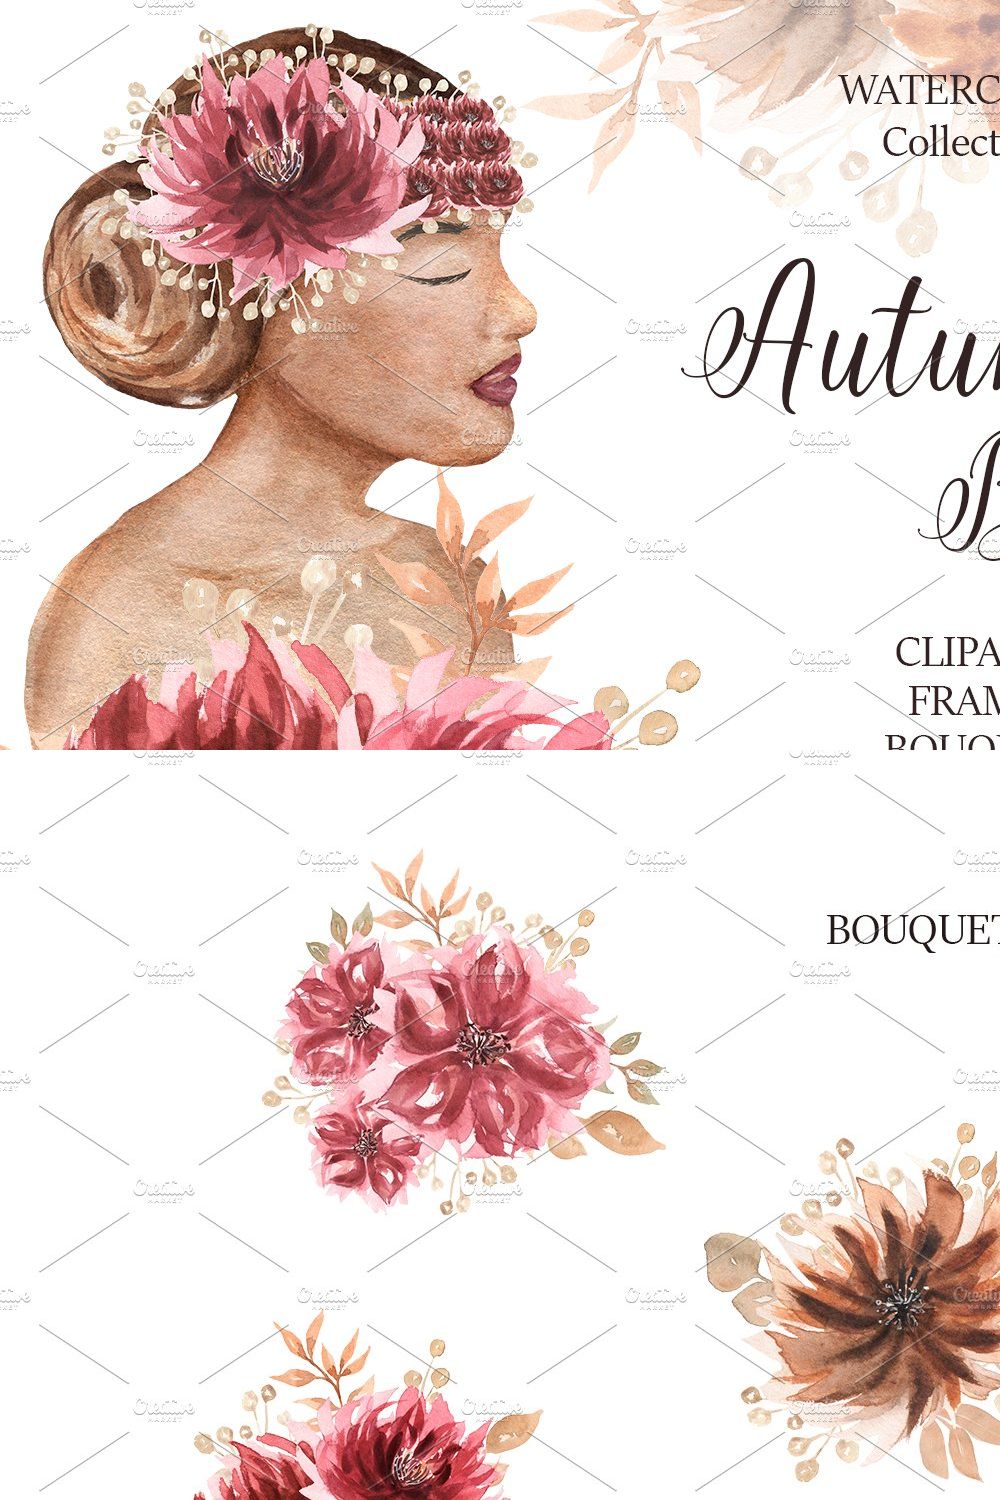 Watercolor Autumn Bride Collection pinterest preview image.